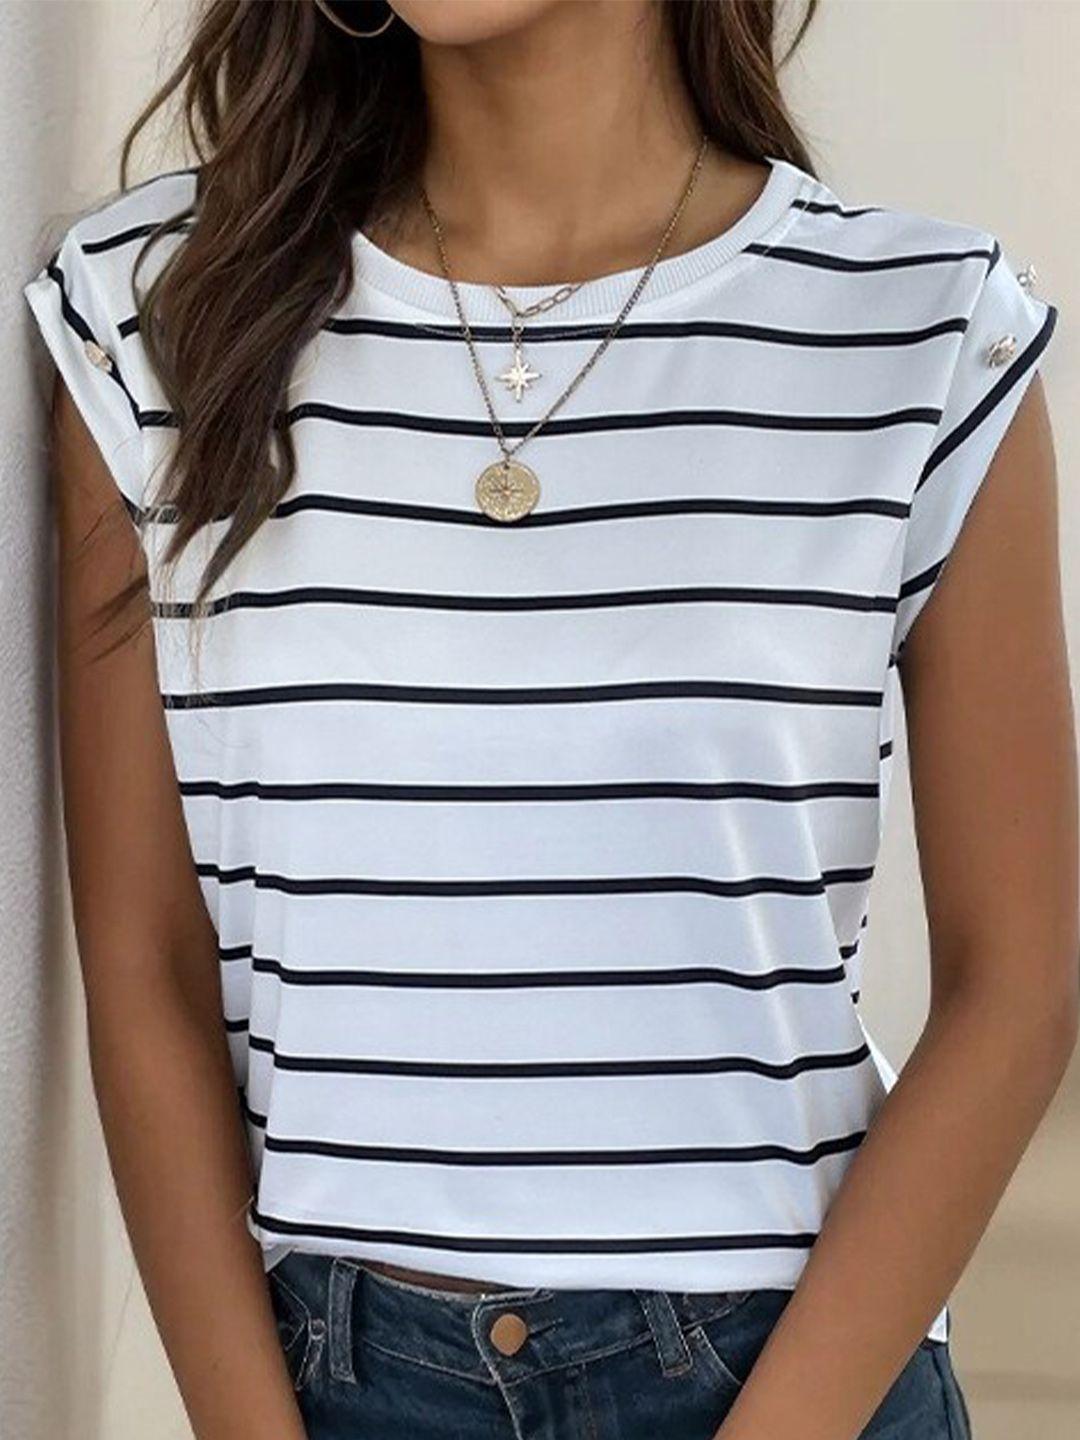 stylecast white & black striped round georgette top